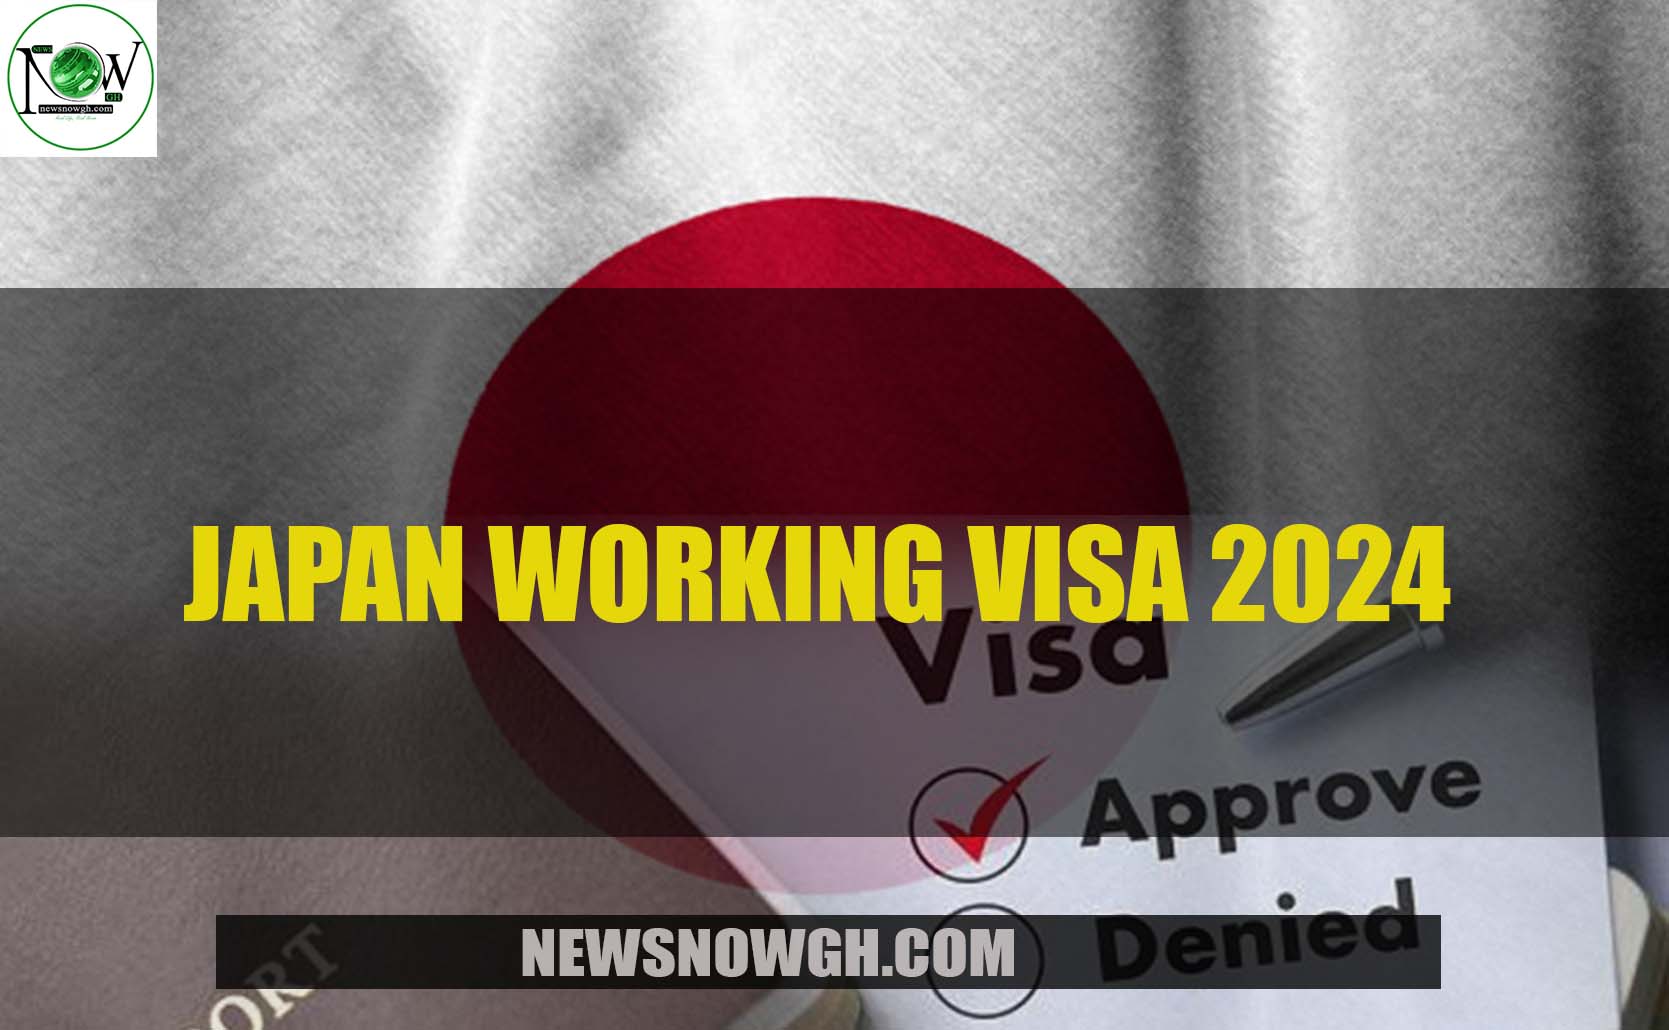 Japan Working Visa 2024 